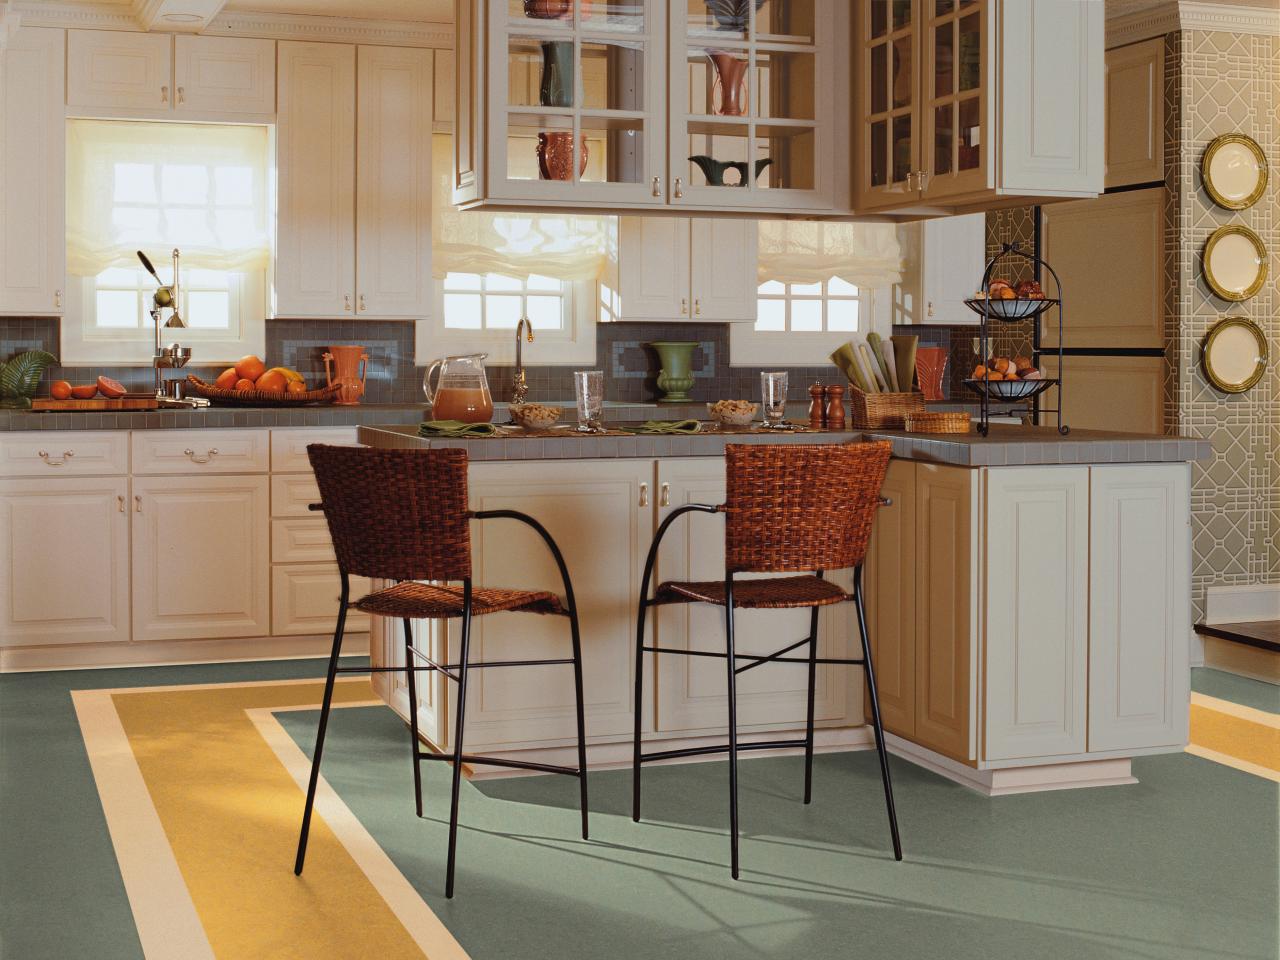 Linoleum kitchen flooring // sndimg.com